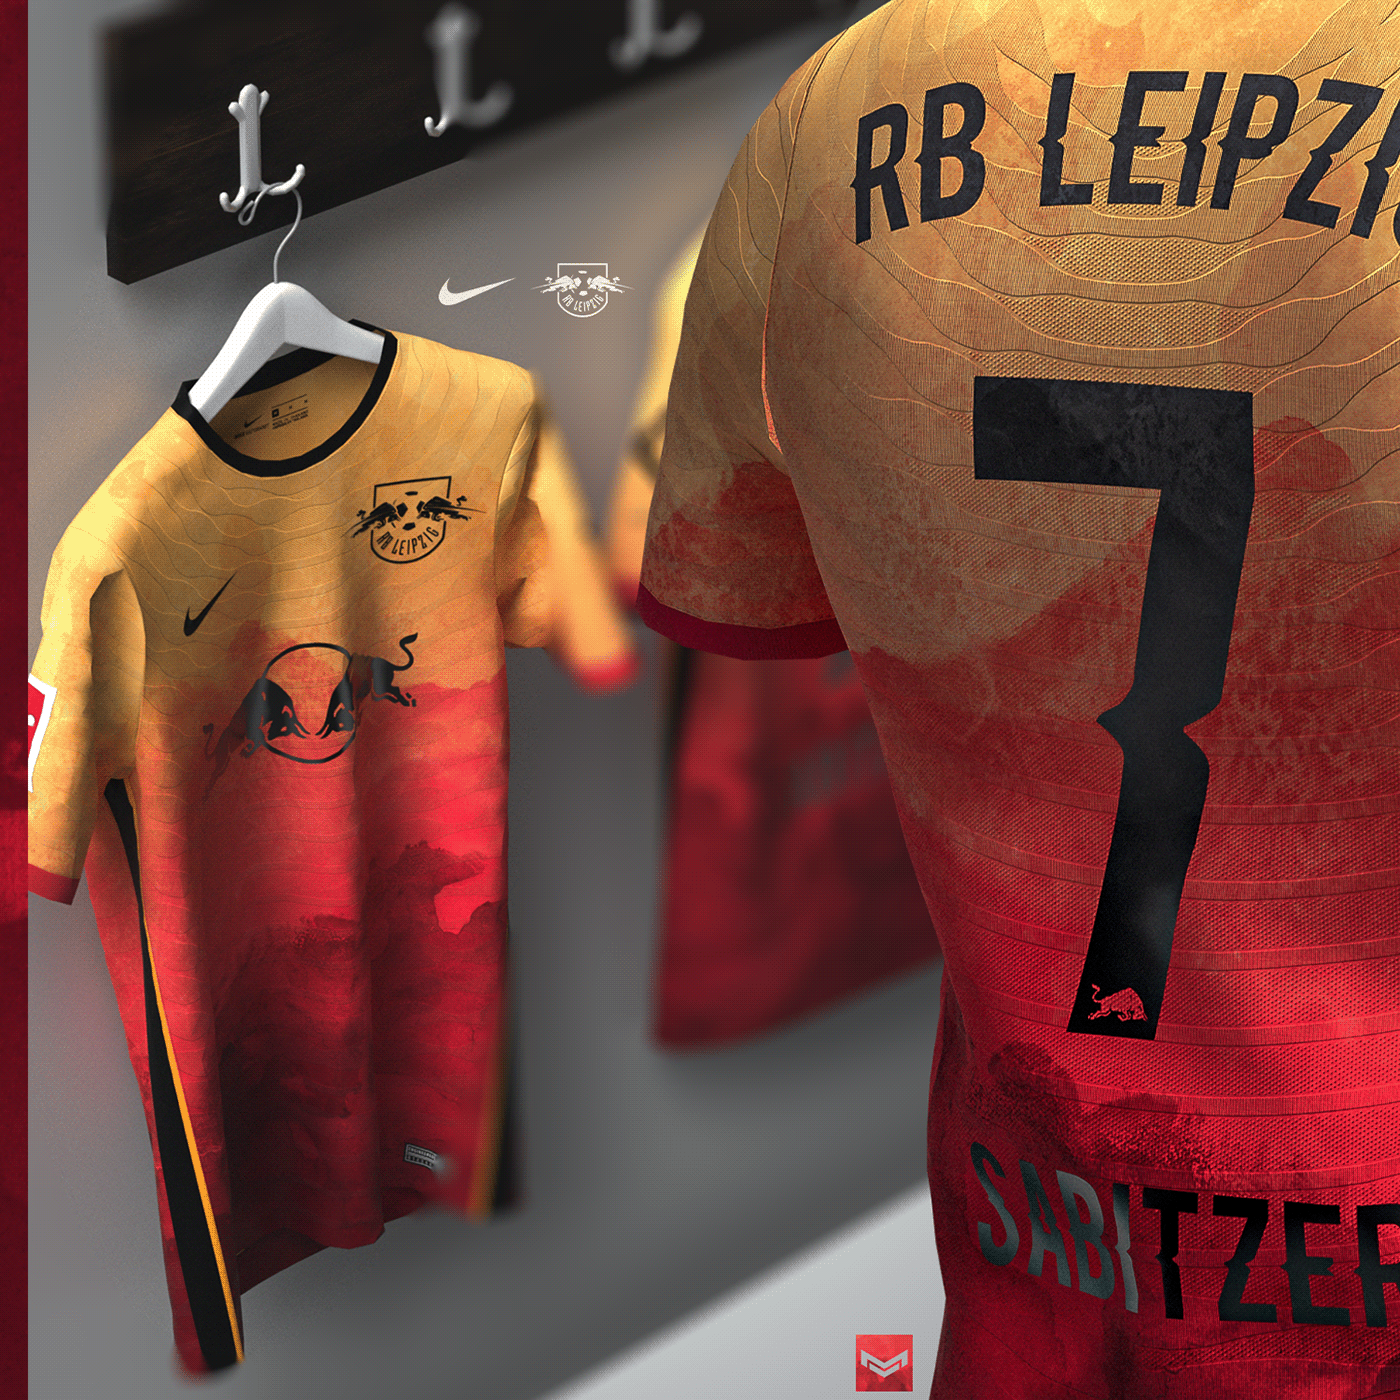 bundesliga concept kit football jersey Football kit Jersey Design Kit Design leipzig RB Leipzig Red Bull RedBull